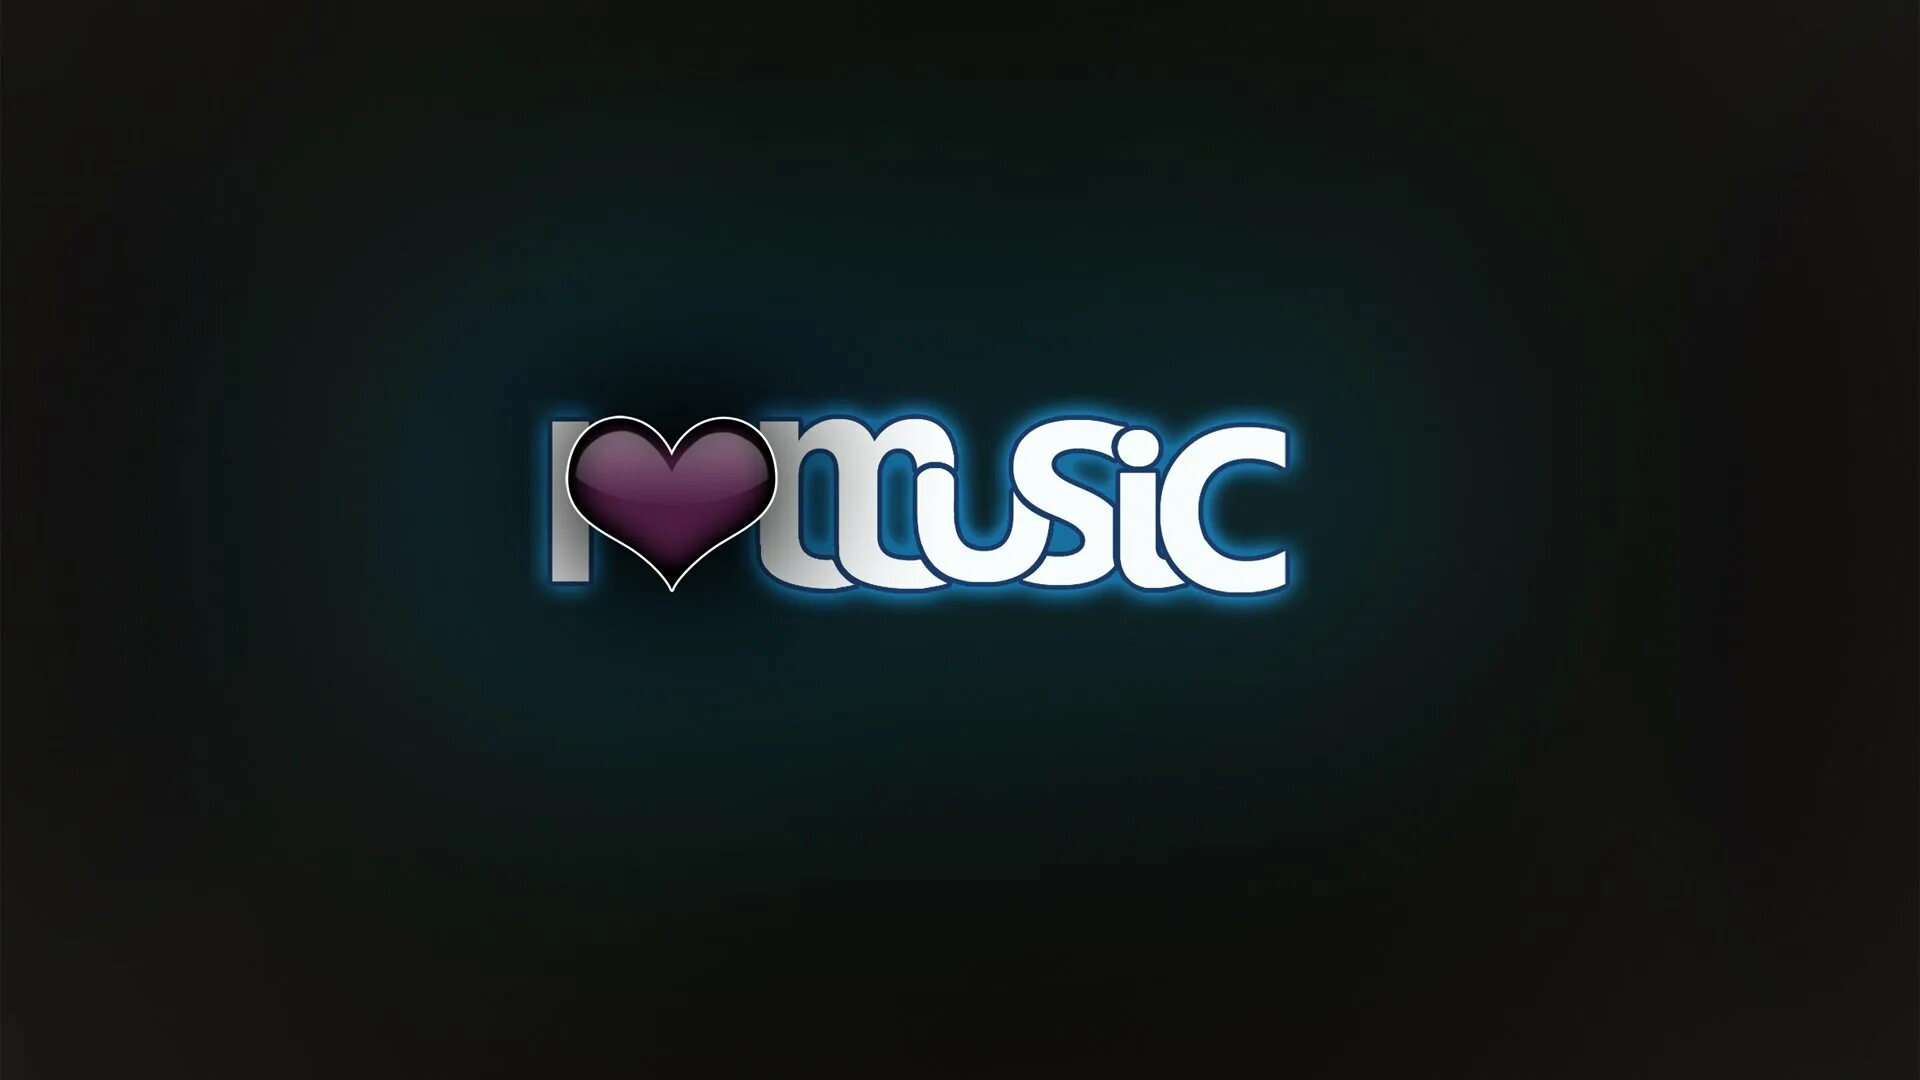 Https music home. Музыкальные обои. Логотип канала. Музыкальные обои на рабочий стол. Логотип для ютуба музыкальный.